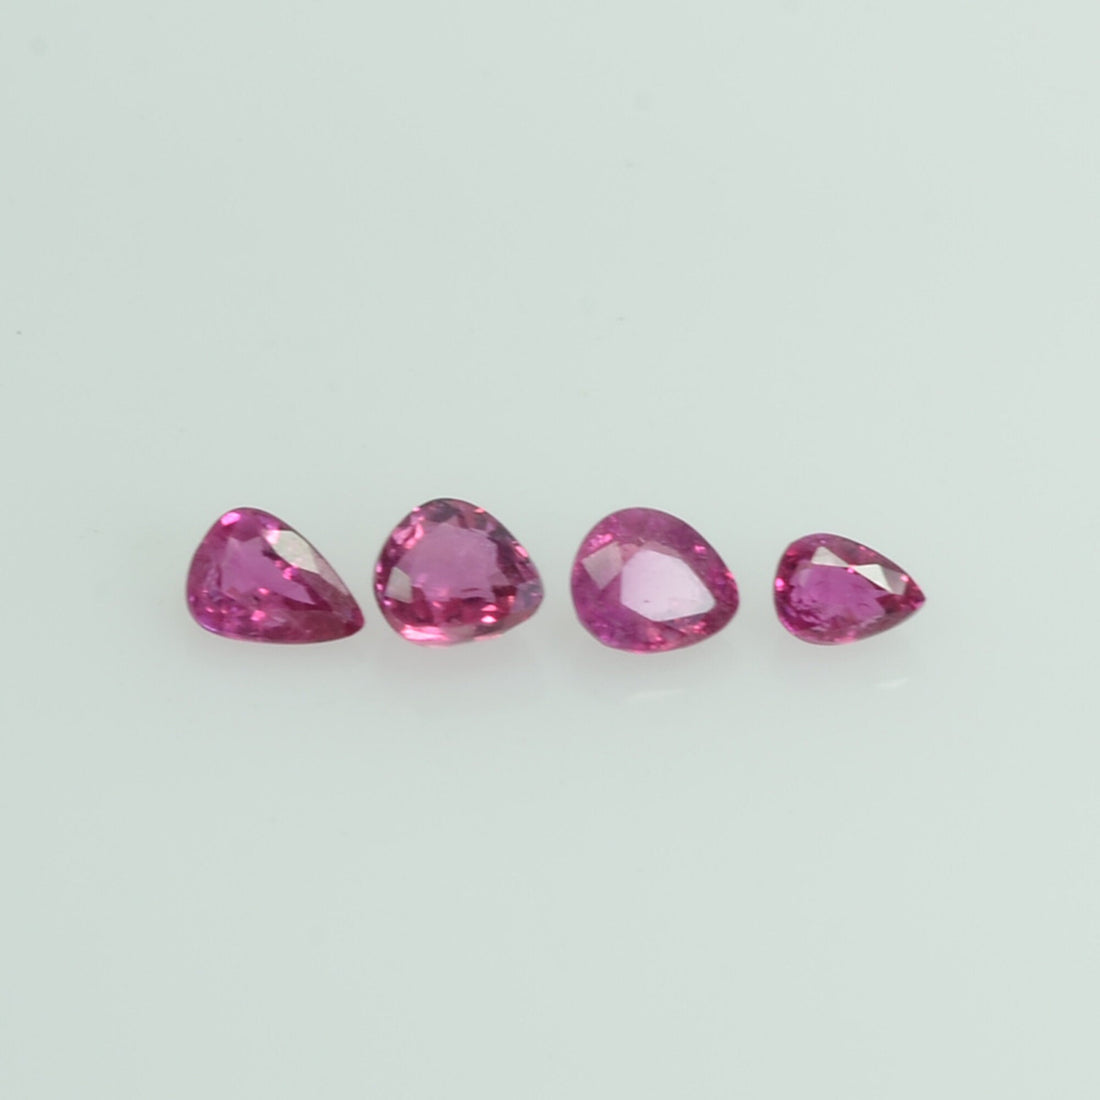 0.72 Cts Natural Ruby Loose Gemstone Pear Cut